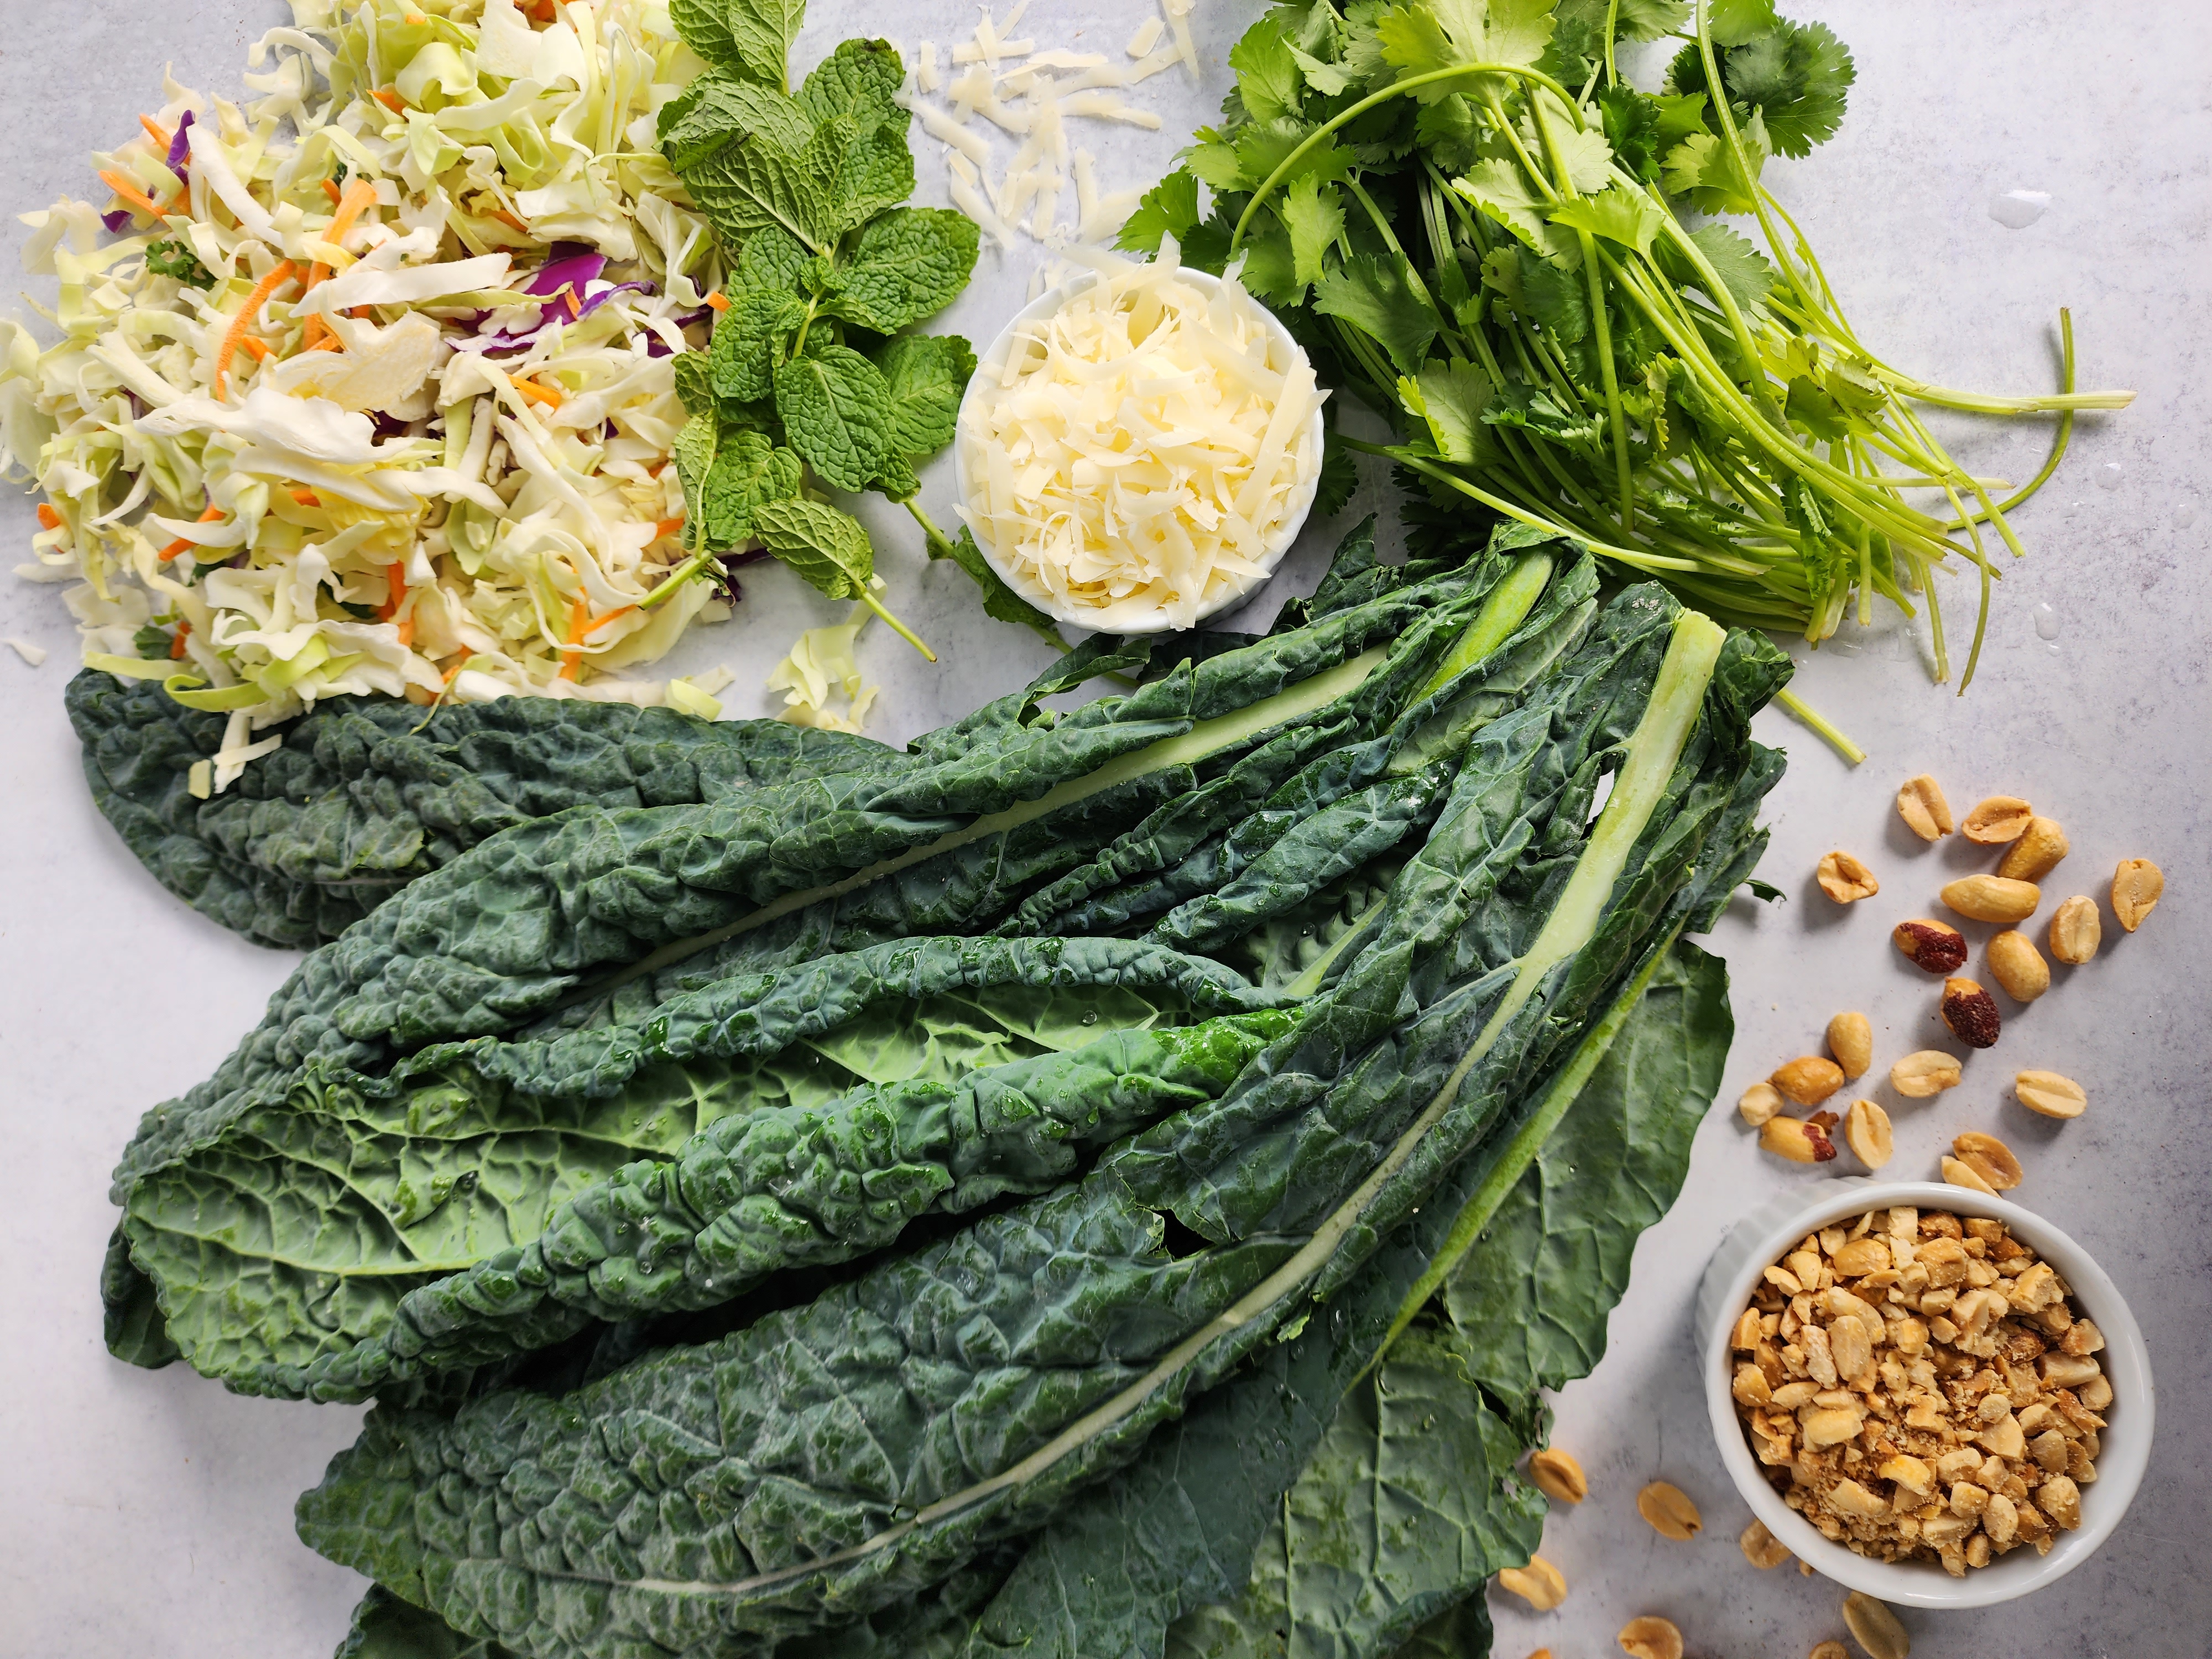 ingredients for a kale salad:  kale, cilantro, mint, cabbage, peanuts, parmesan cheese